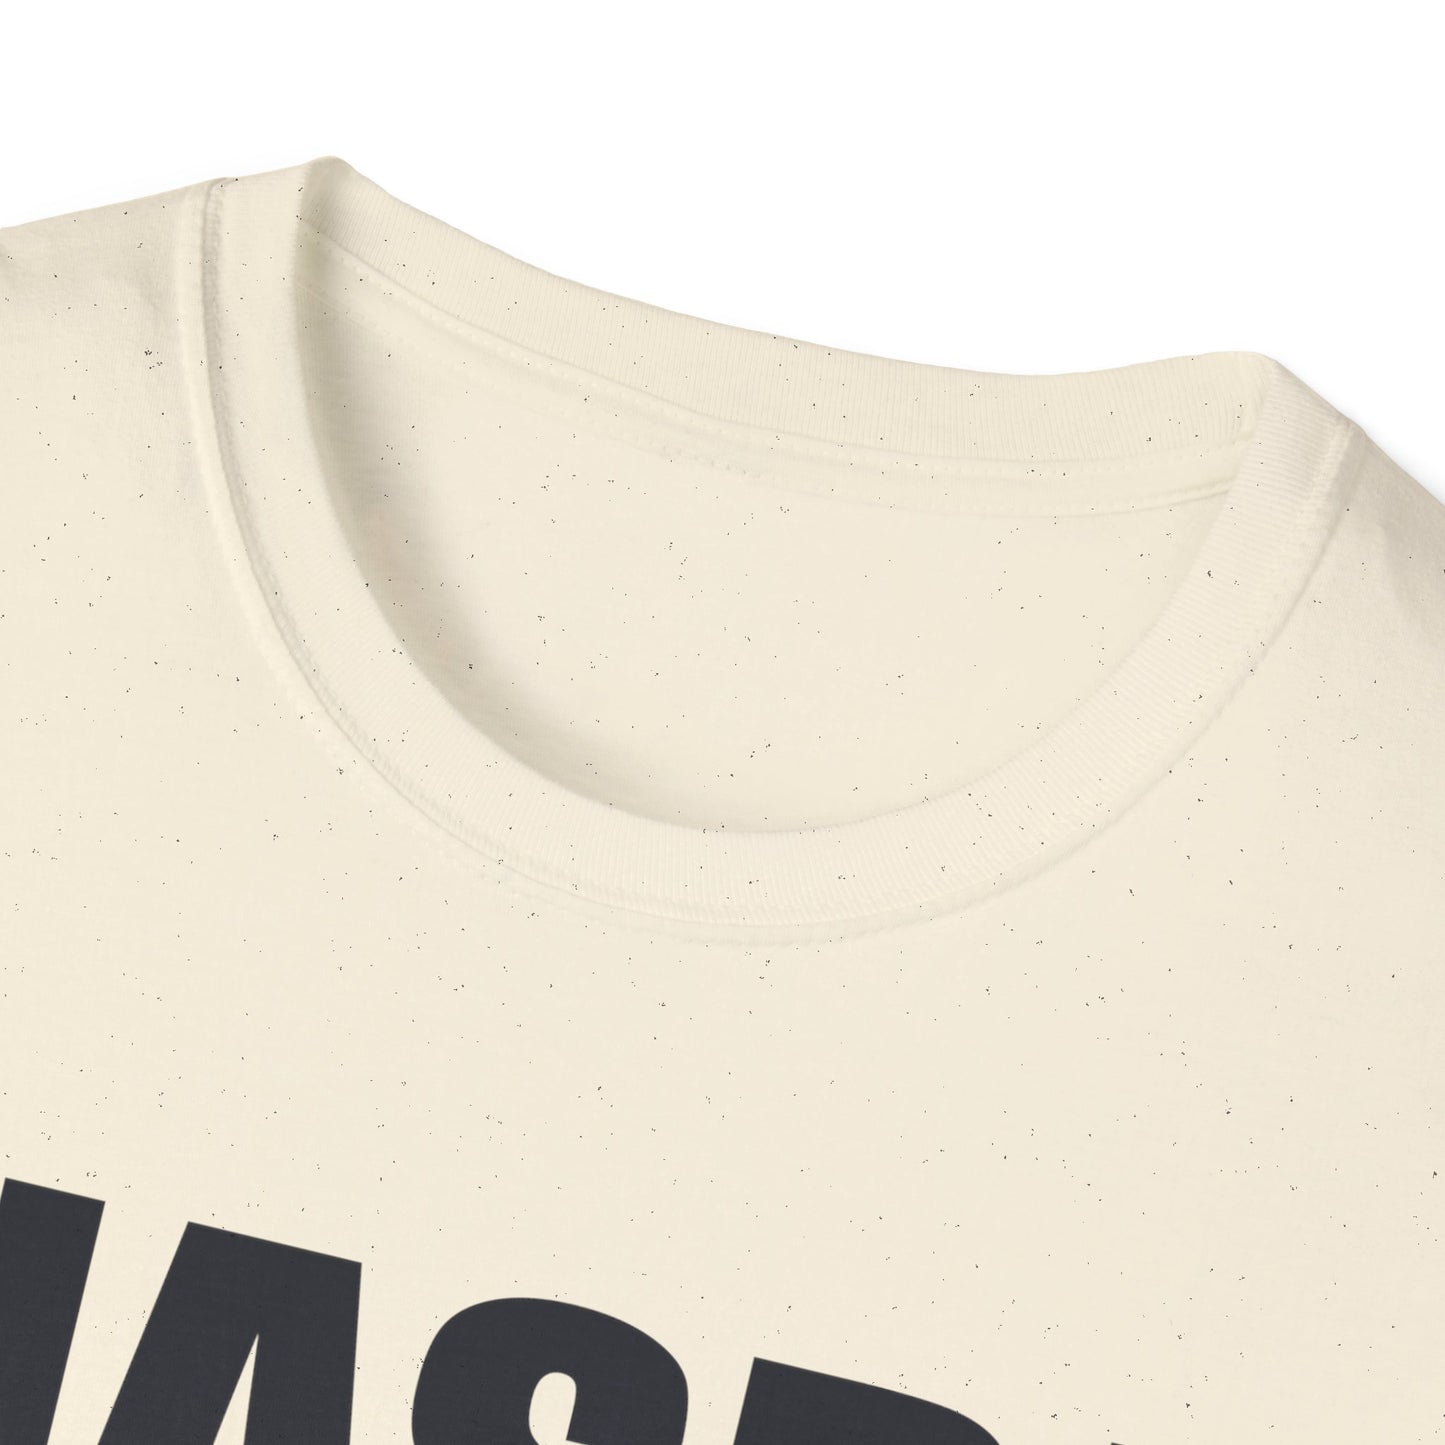 TEAM CATTLE DOG  - NASDA  Unisex Softstyle T-Shirt